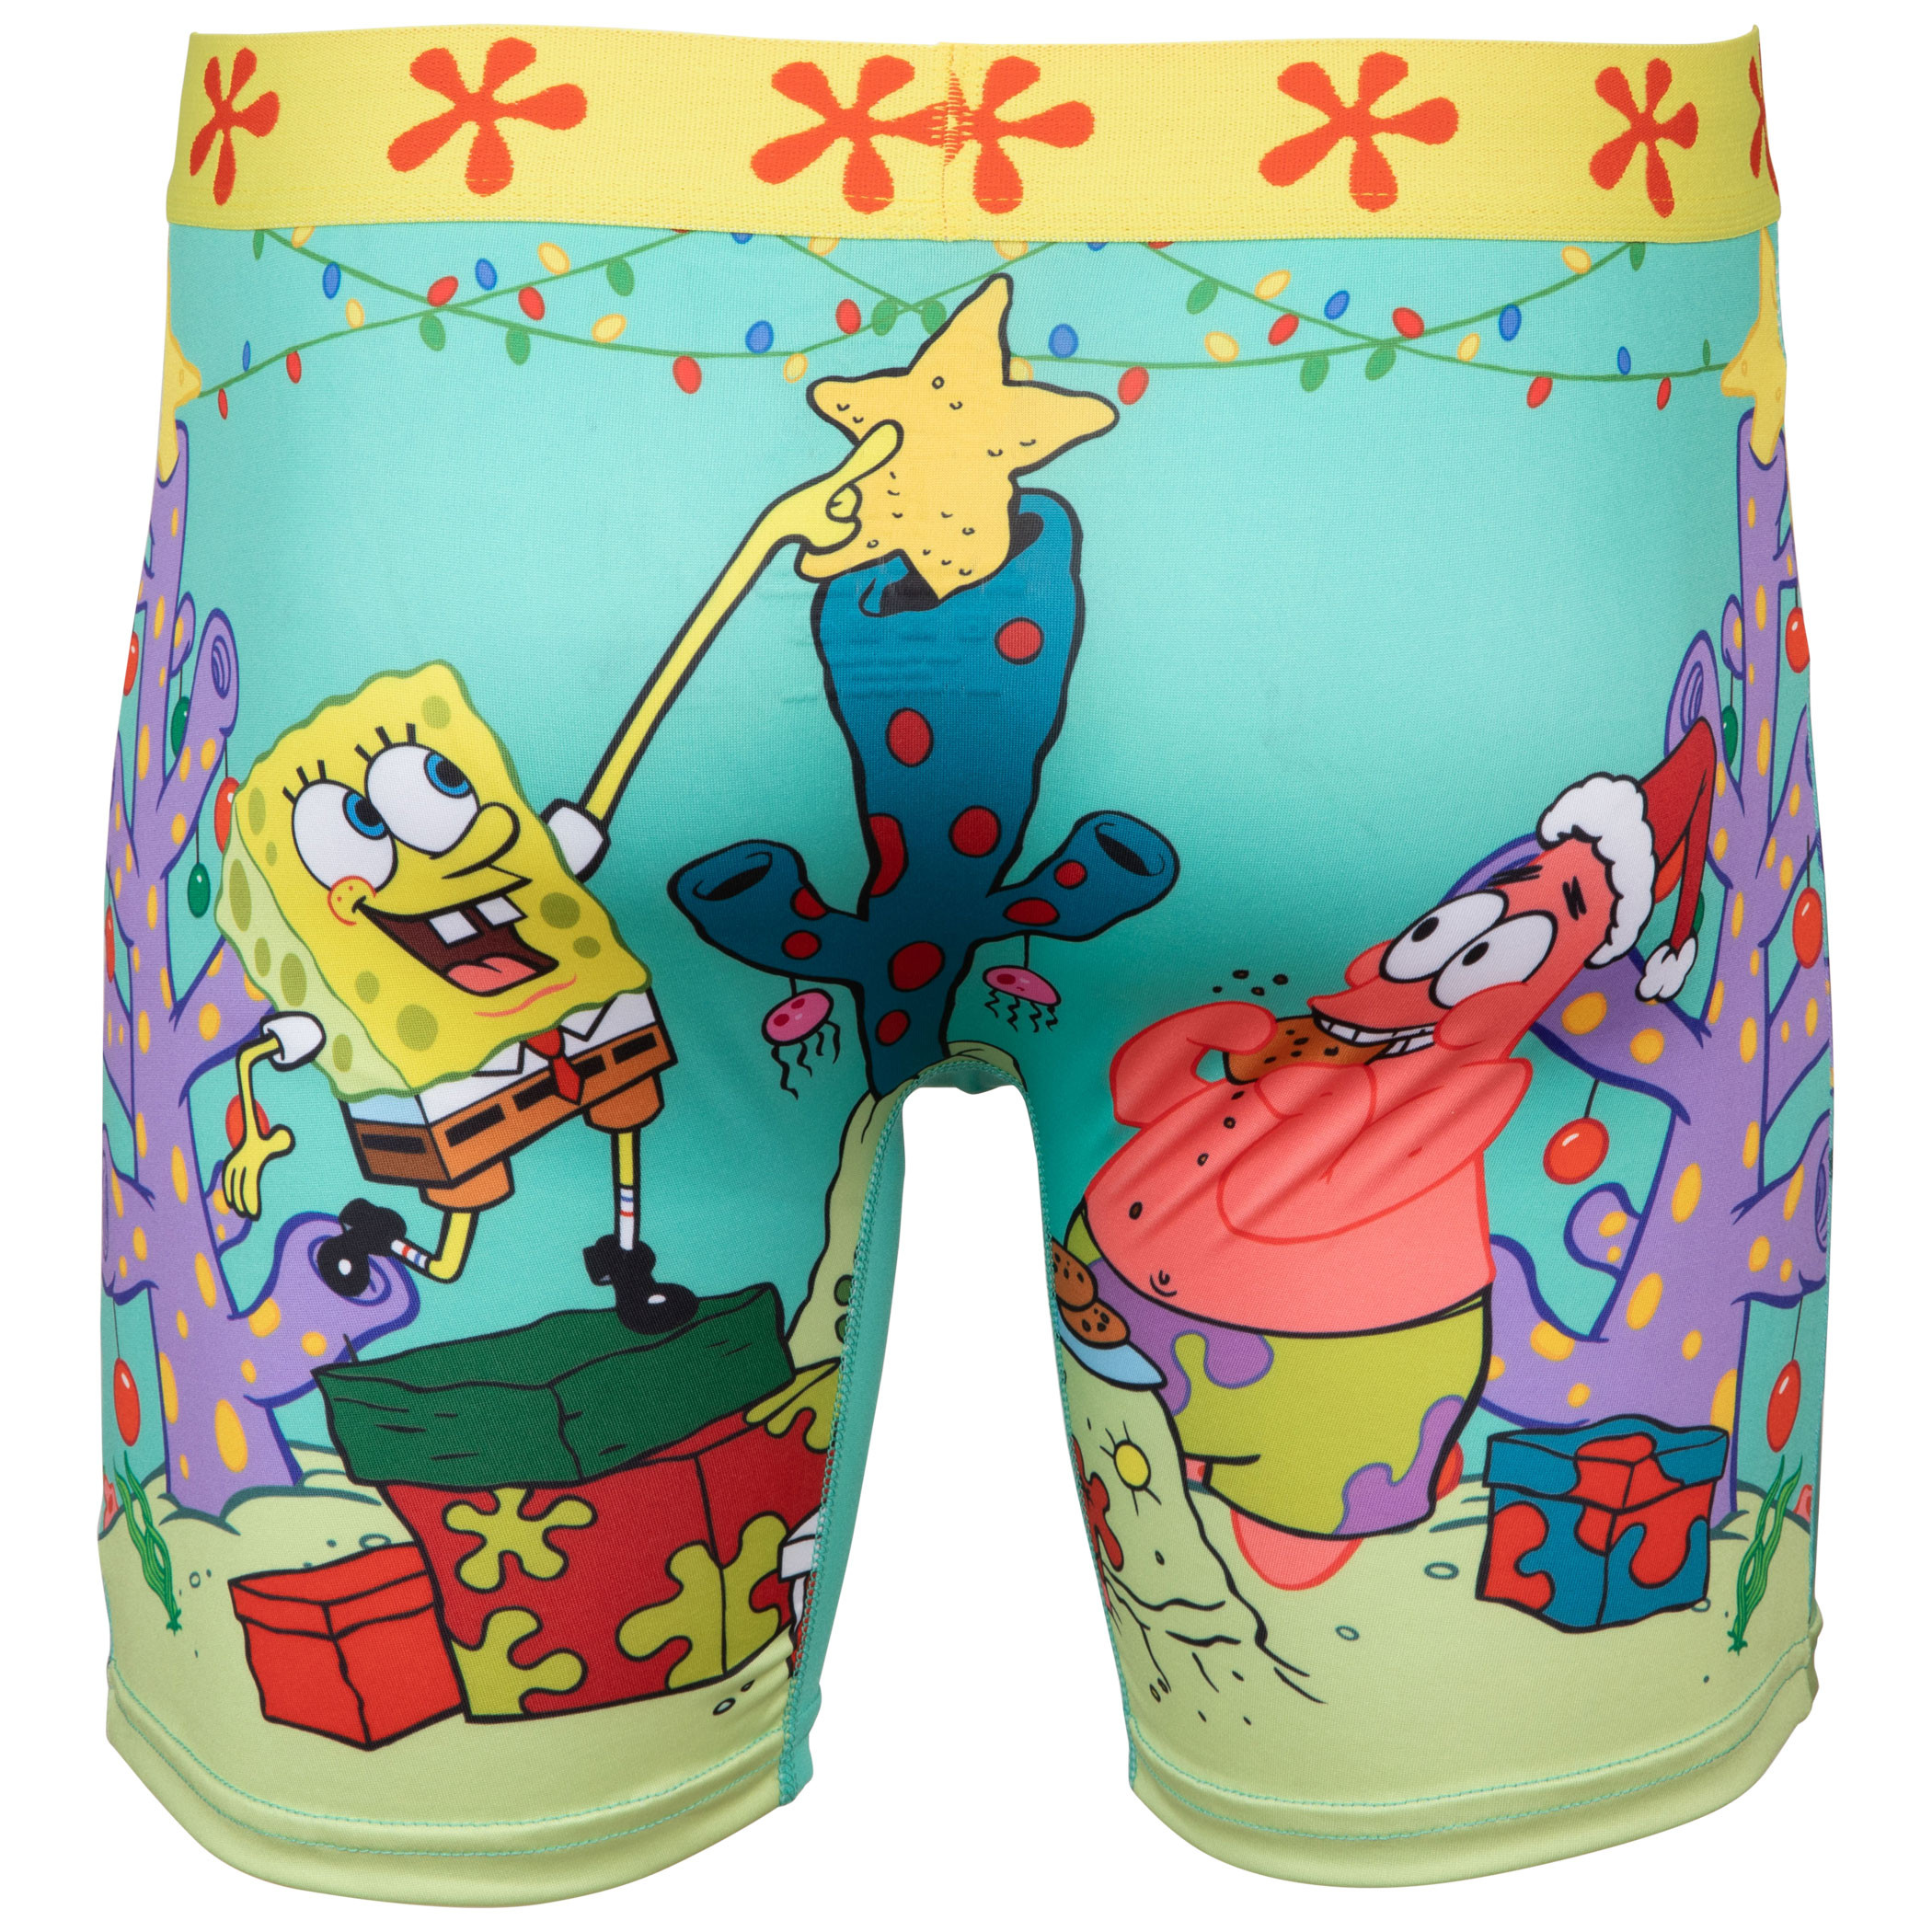 SpongeBob SquarePants Decorating the Holiday Coral Boxer Briefs